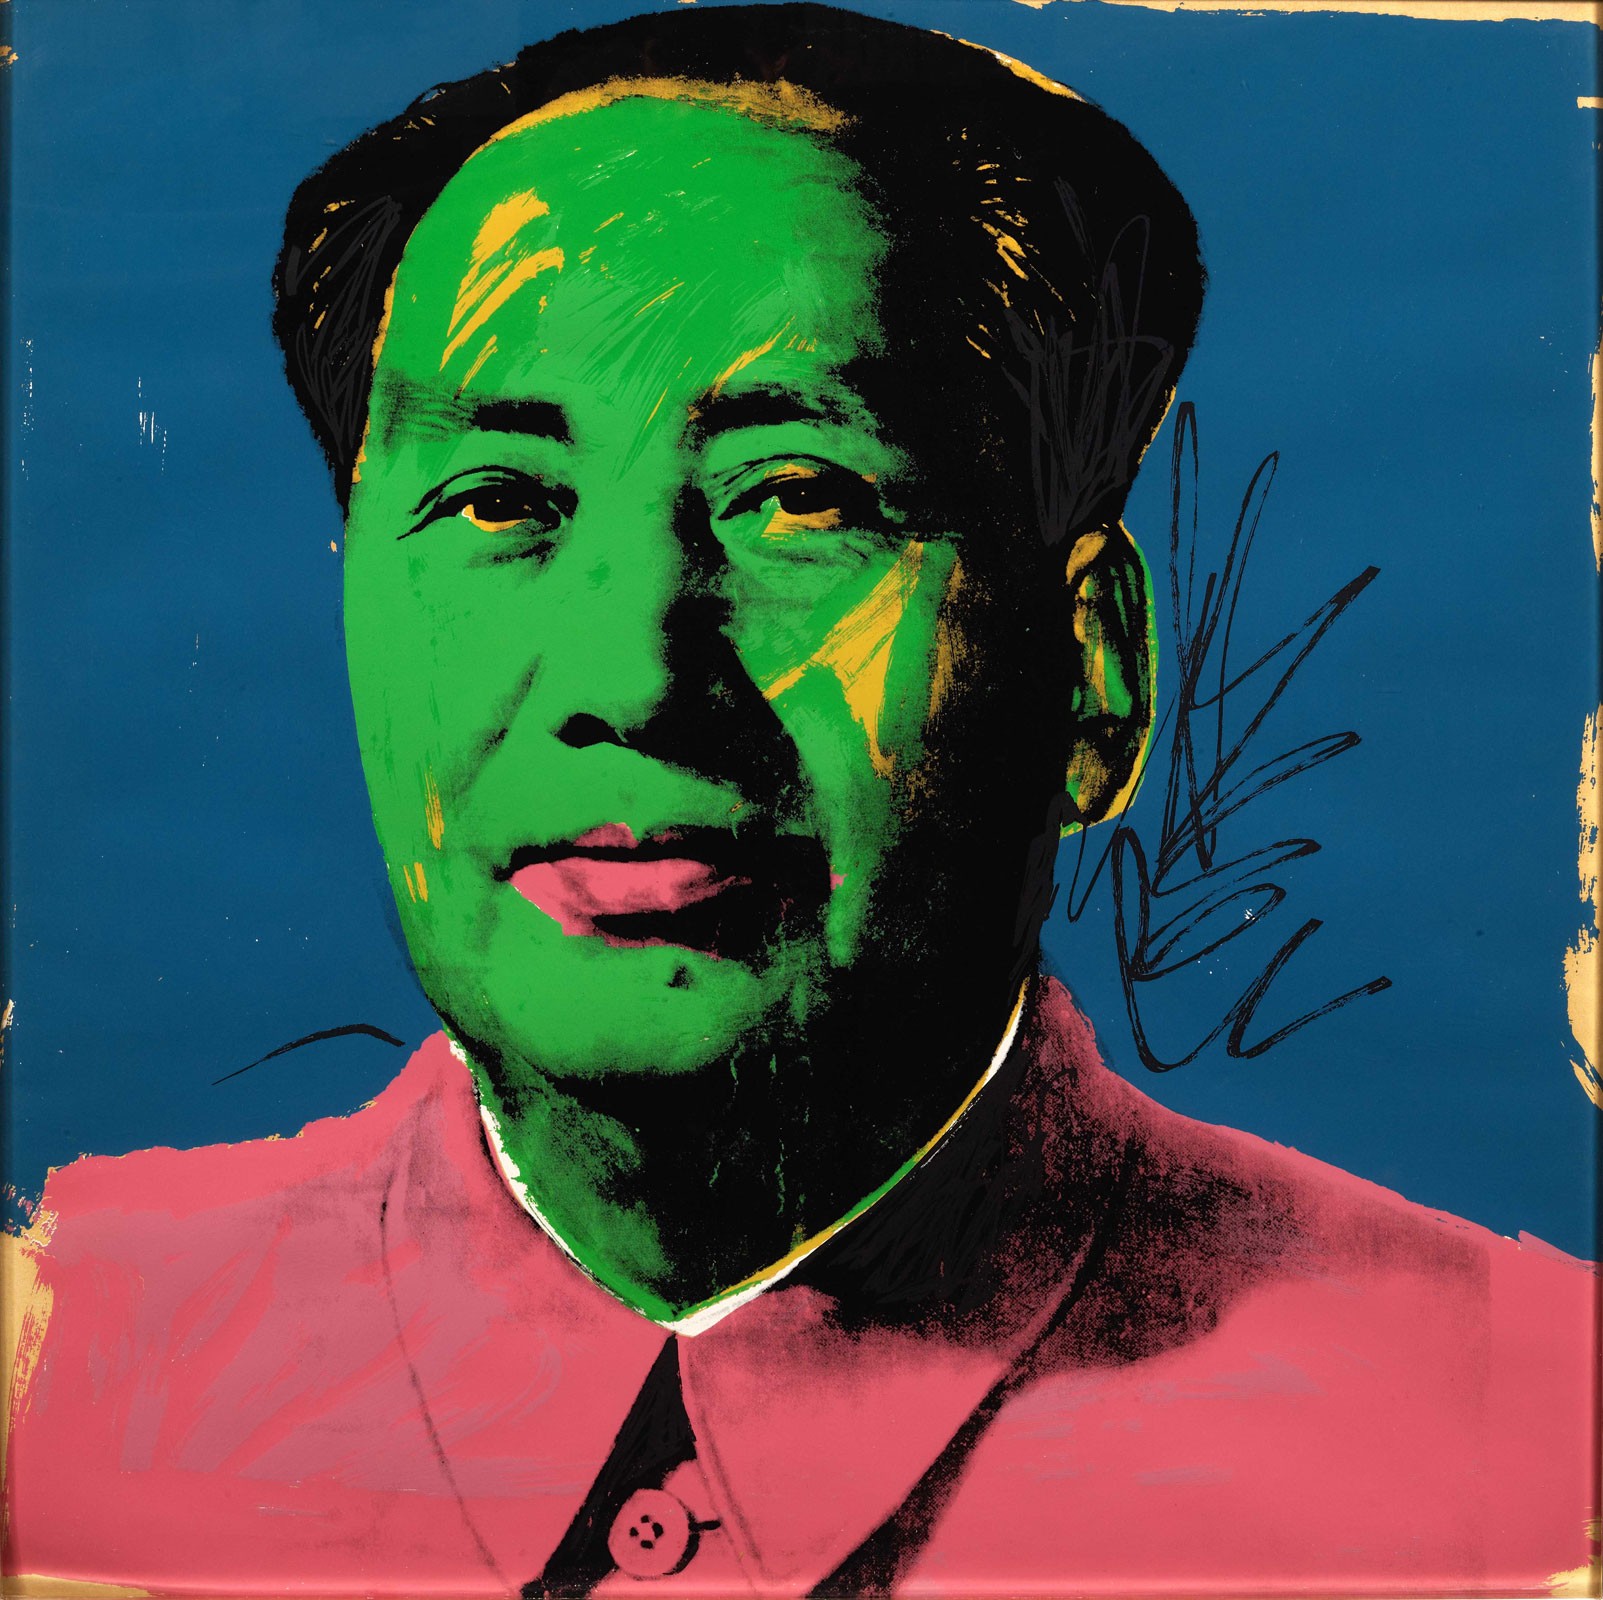 Chairman Mao, c.1972, Screenprint in Colors